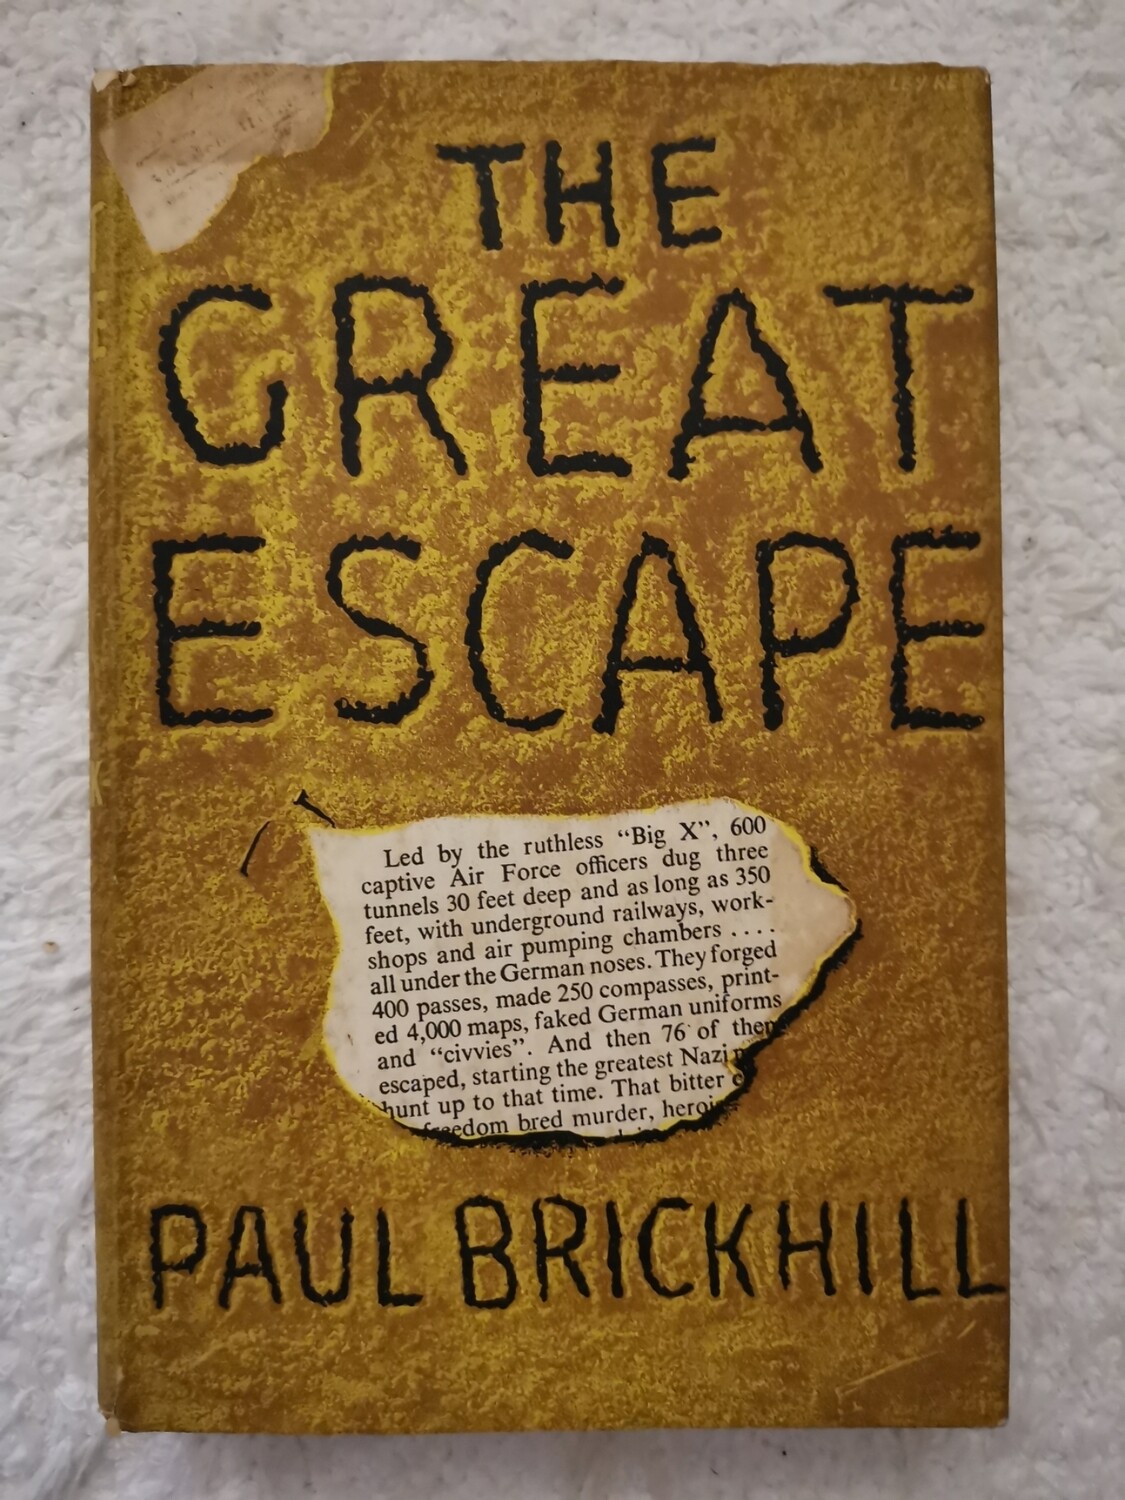 The great escape, Paul Brickhill